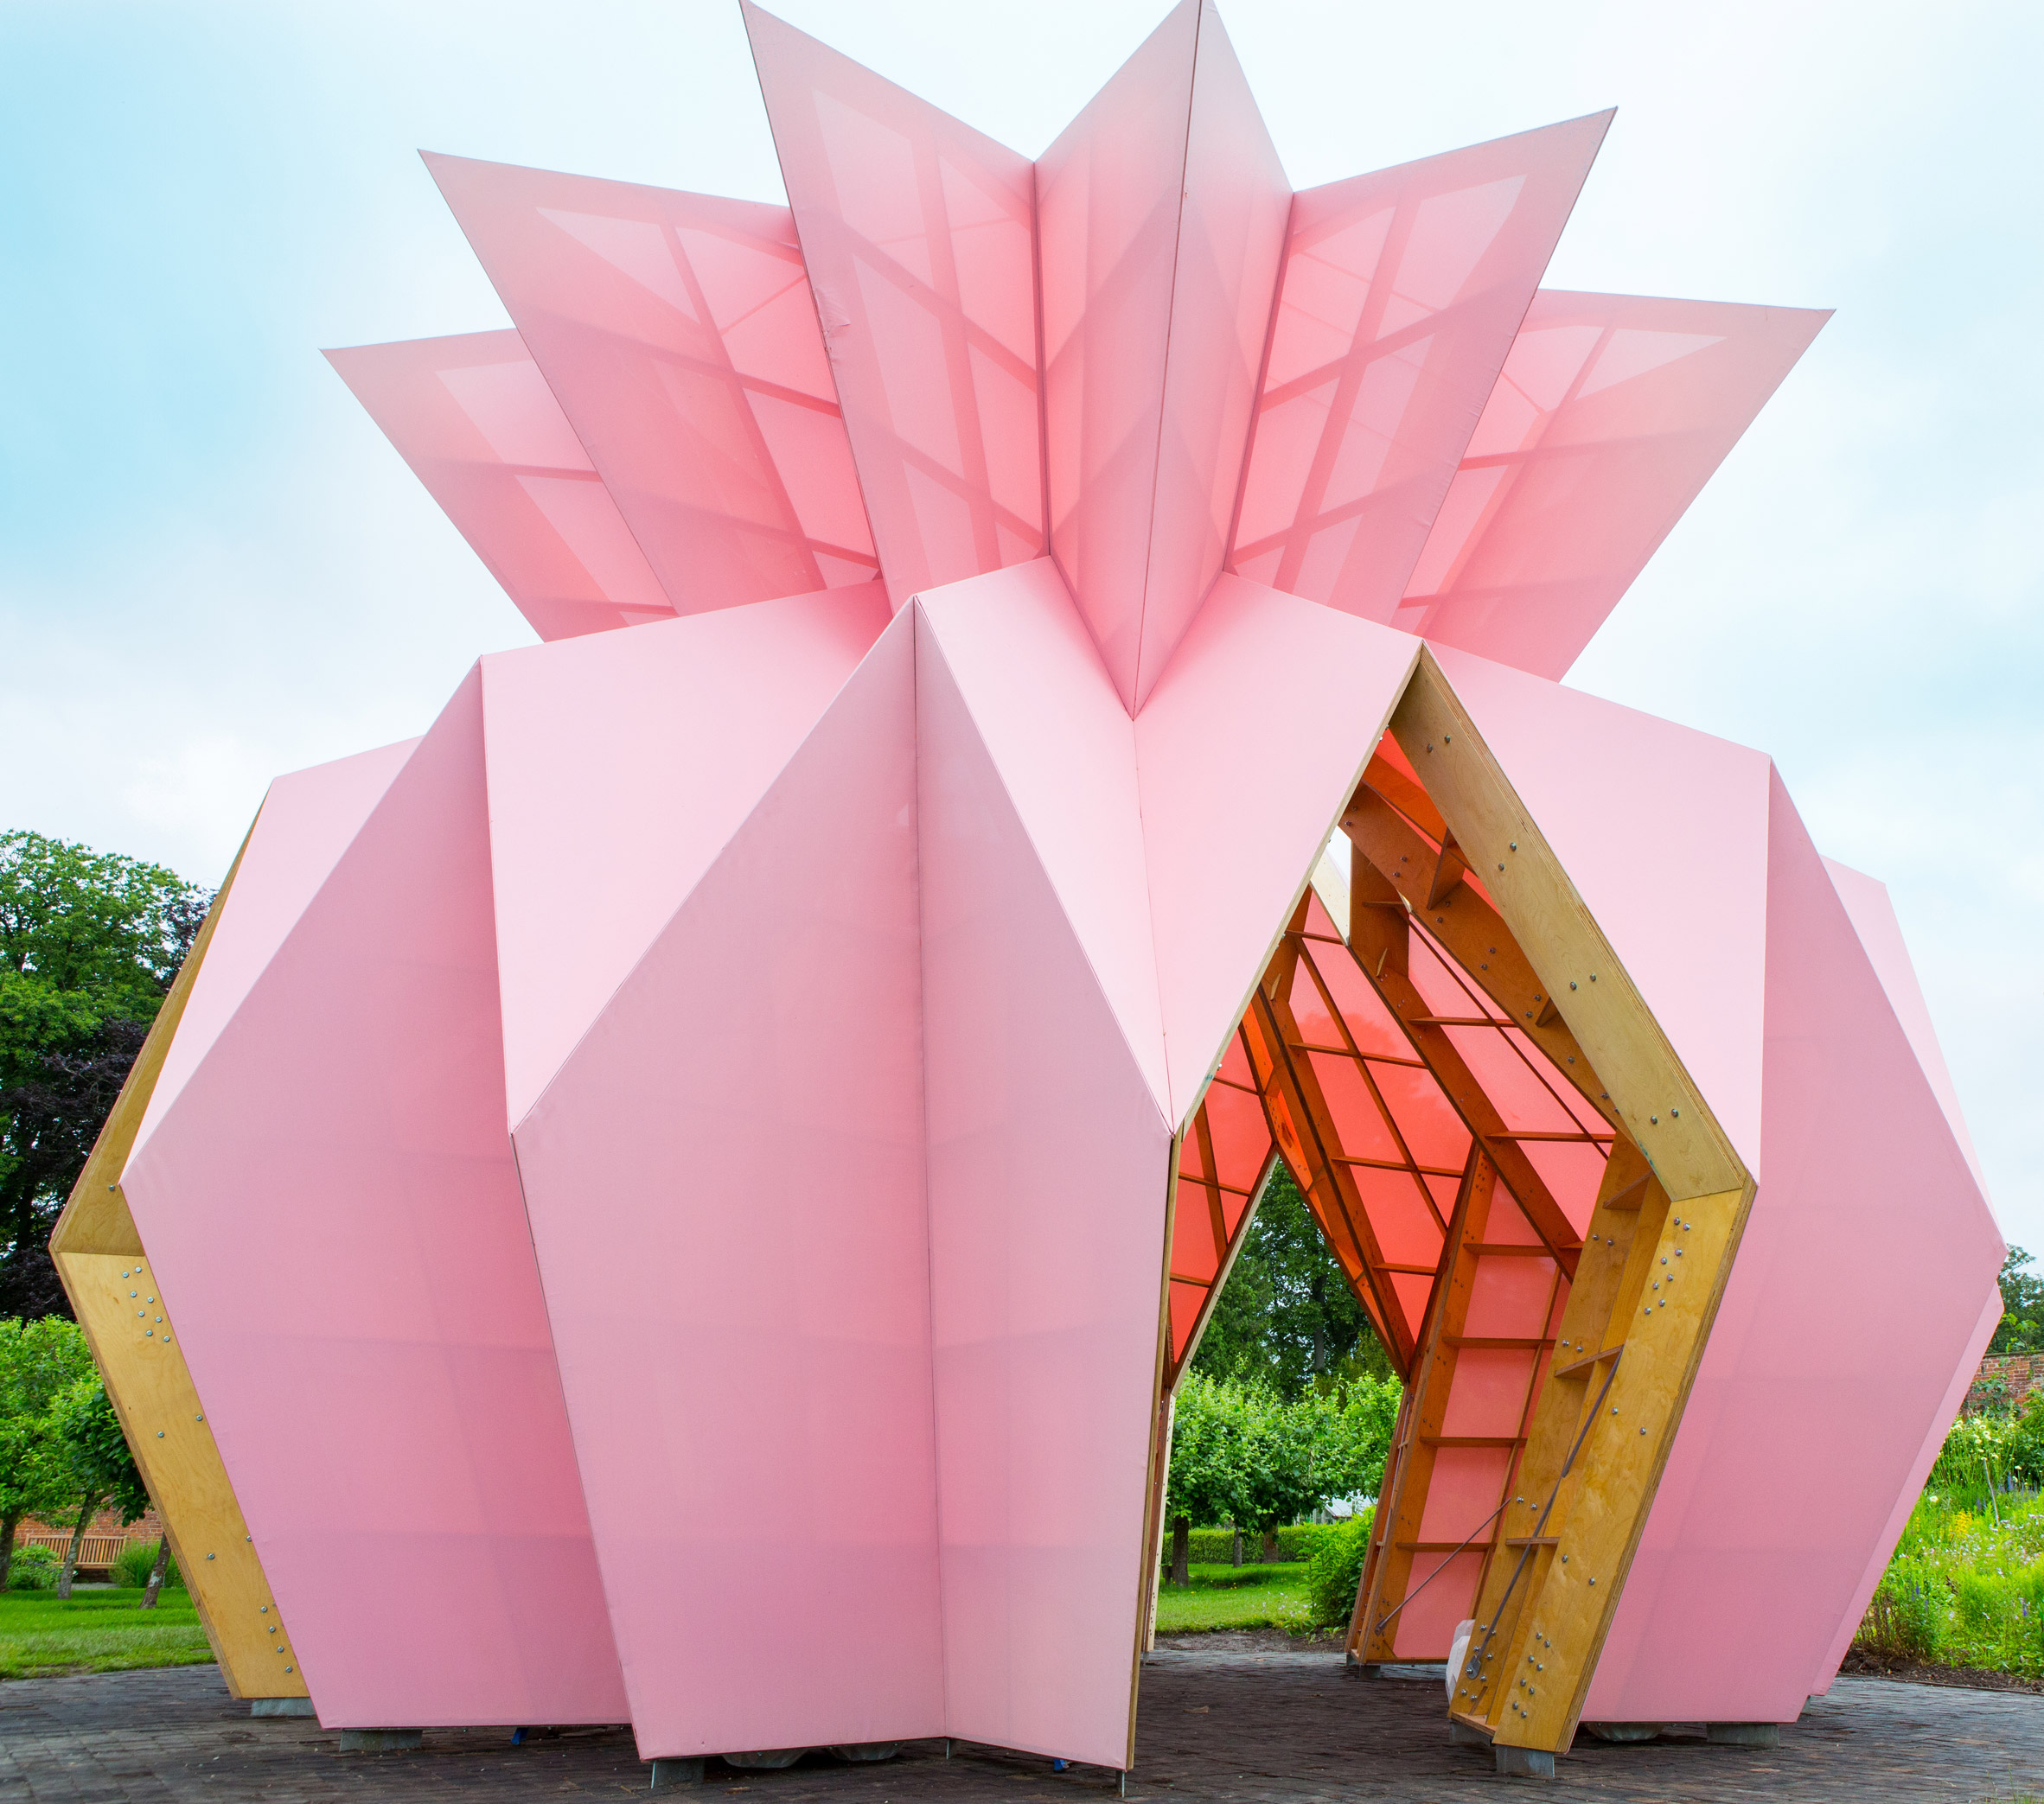 Studio Morison construct origami-like pink pavilion at the National Trust estate, Berrington Hall